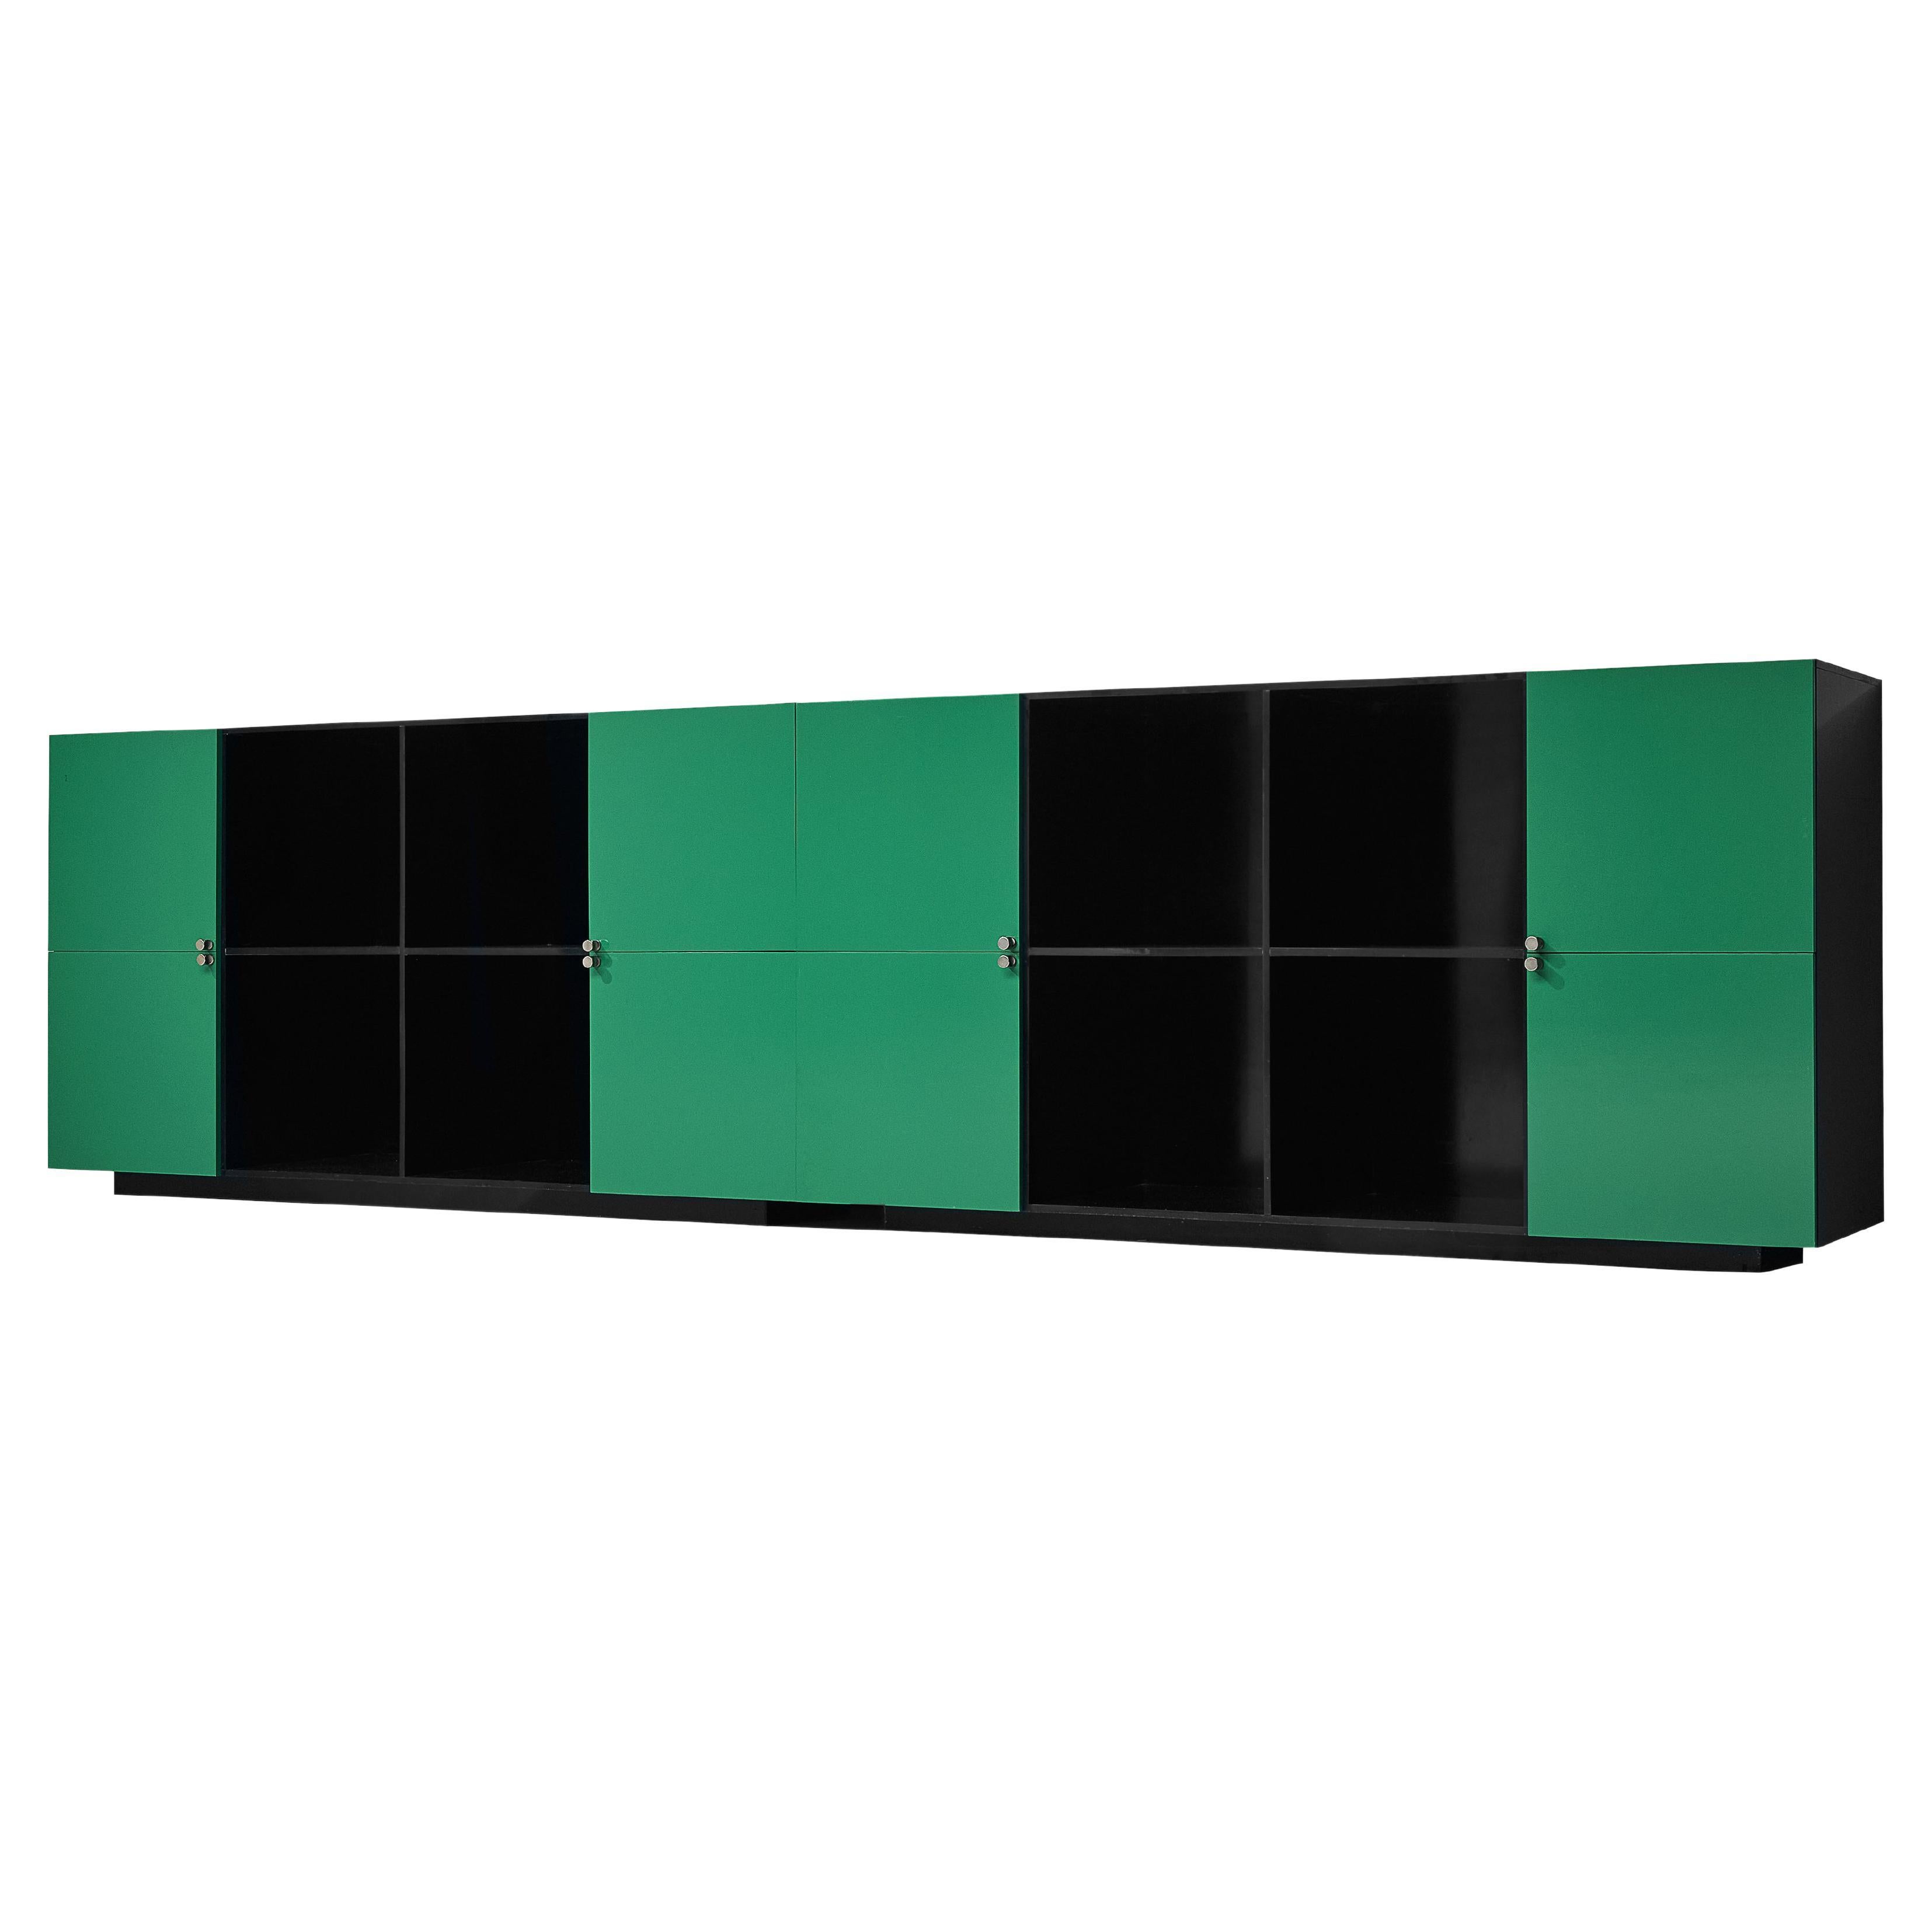 Luigi Saccardo ´Topline´ Sideboard in Laminated Black and Green Wood